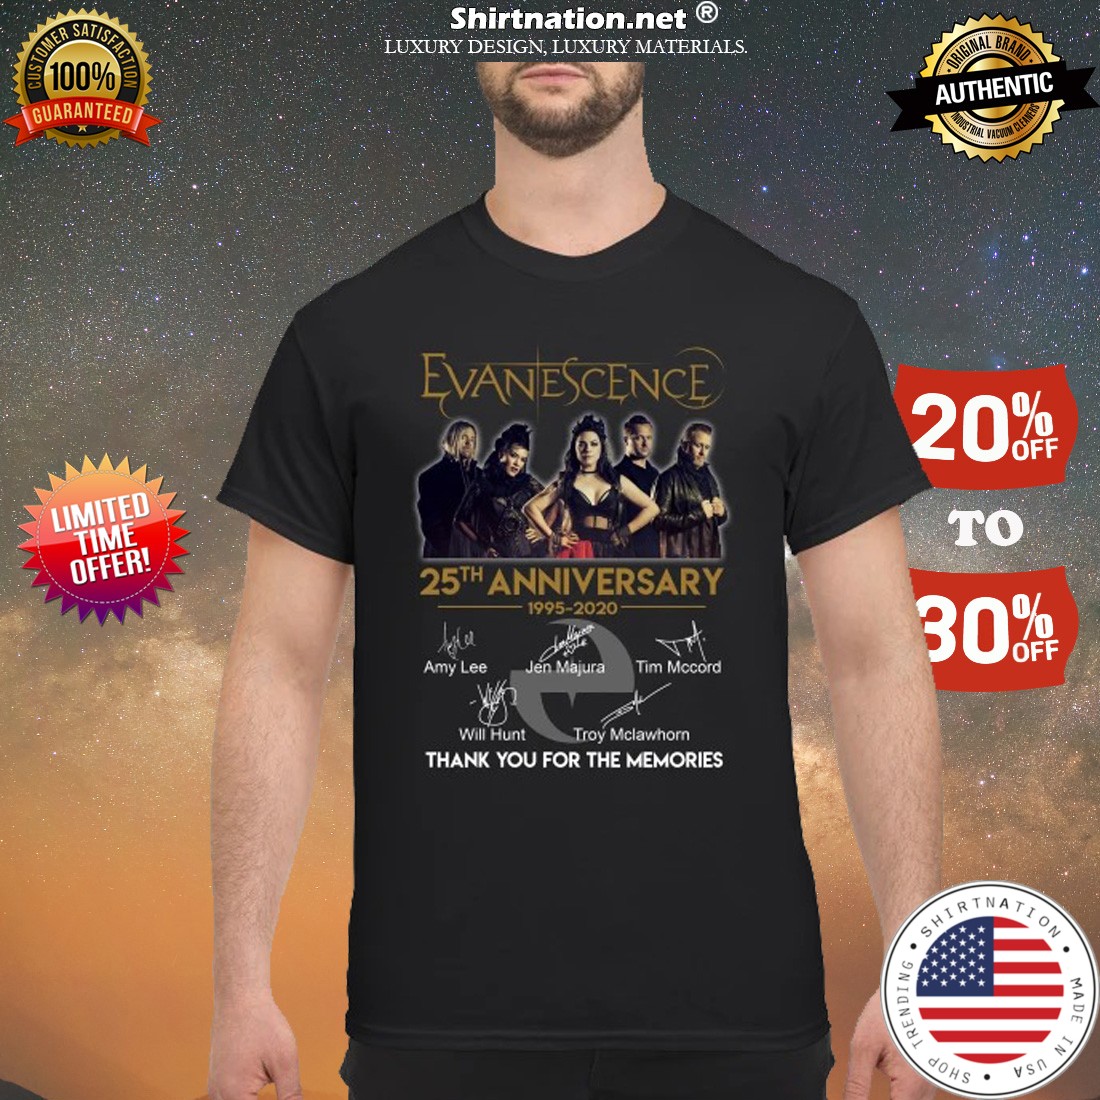 Evanescence 25th anniversary shirt